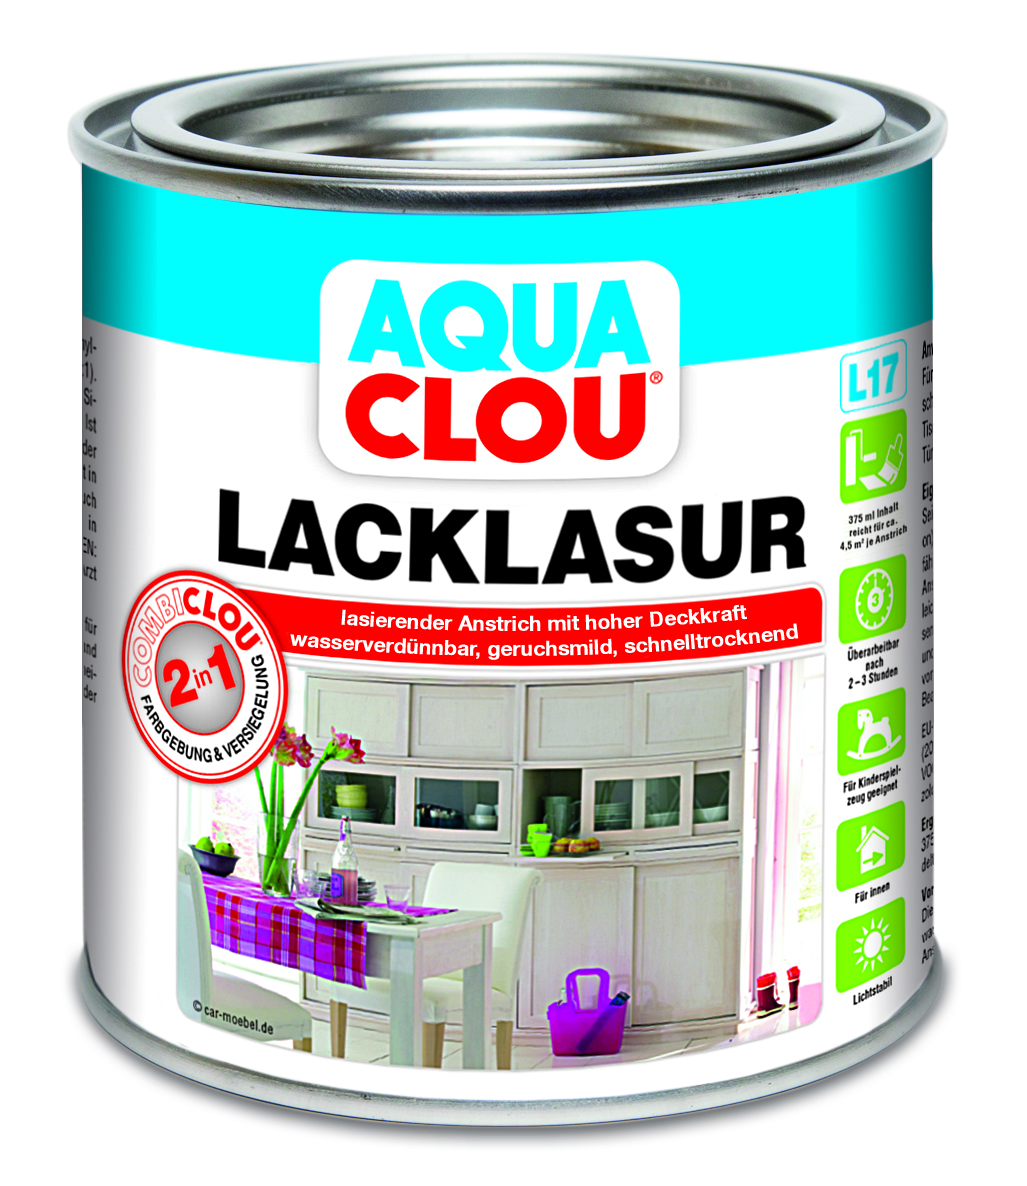 AQUA CLOU Lacklasur L17, 375 ml - Eiche mittel